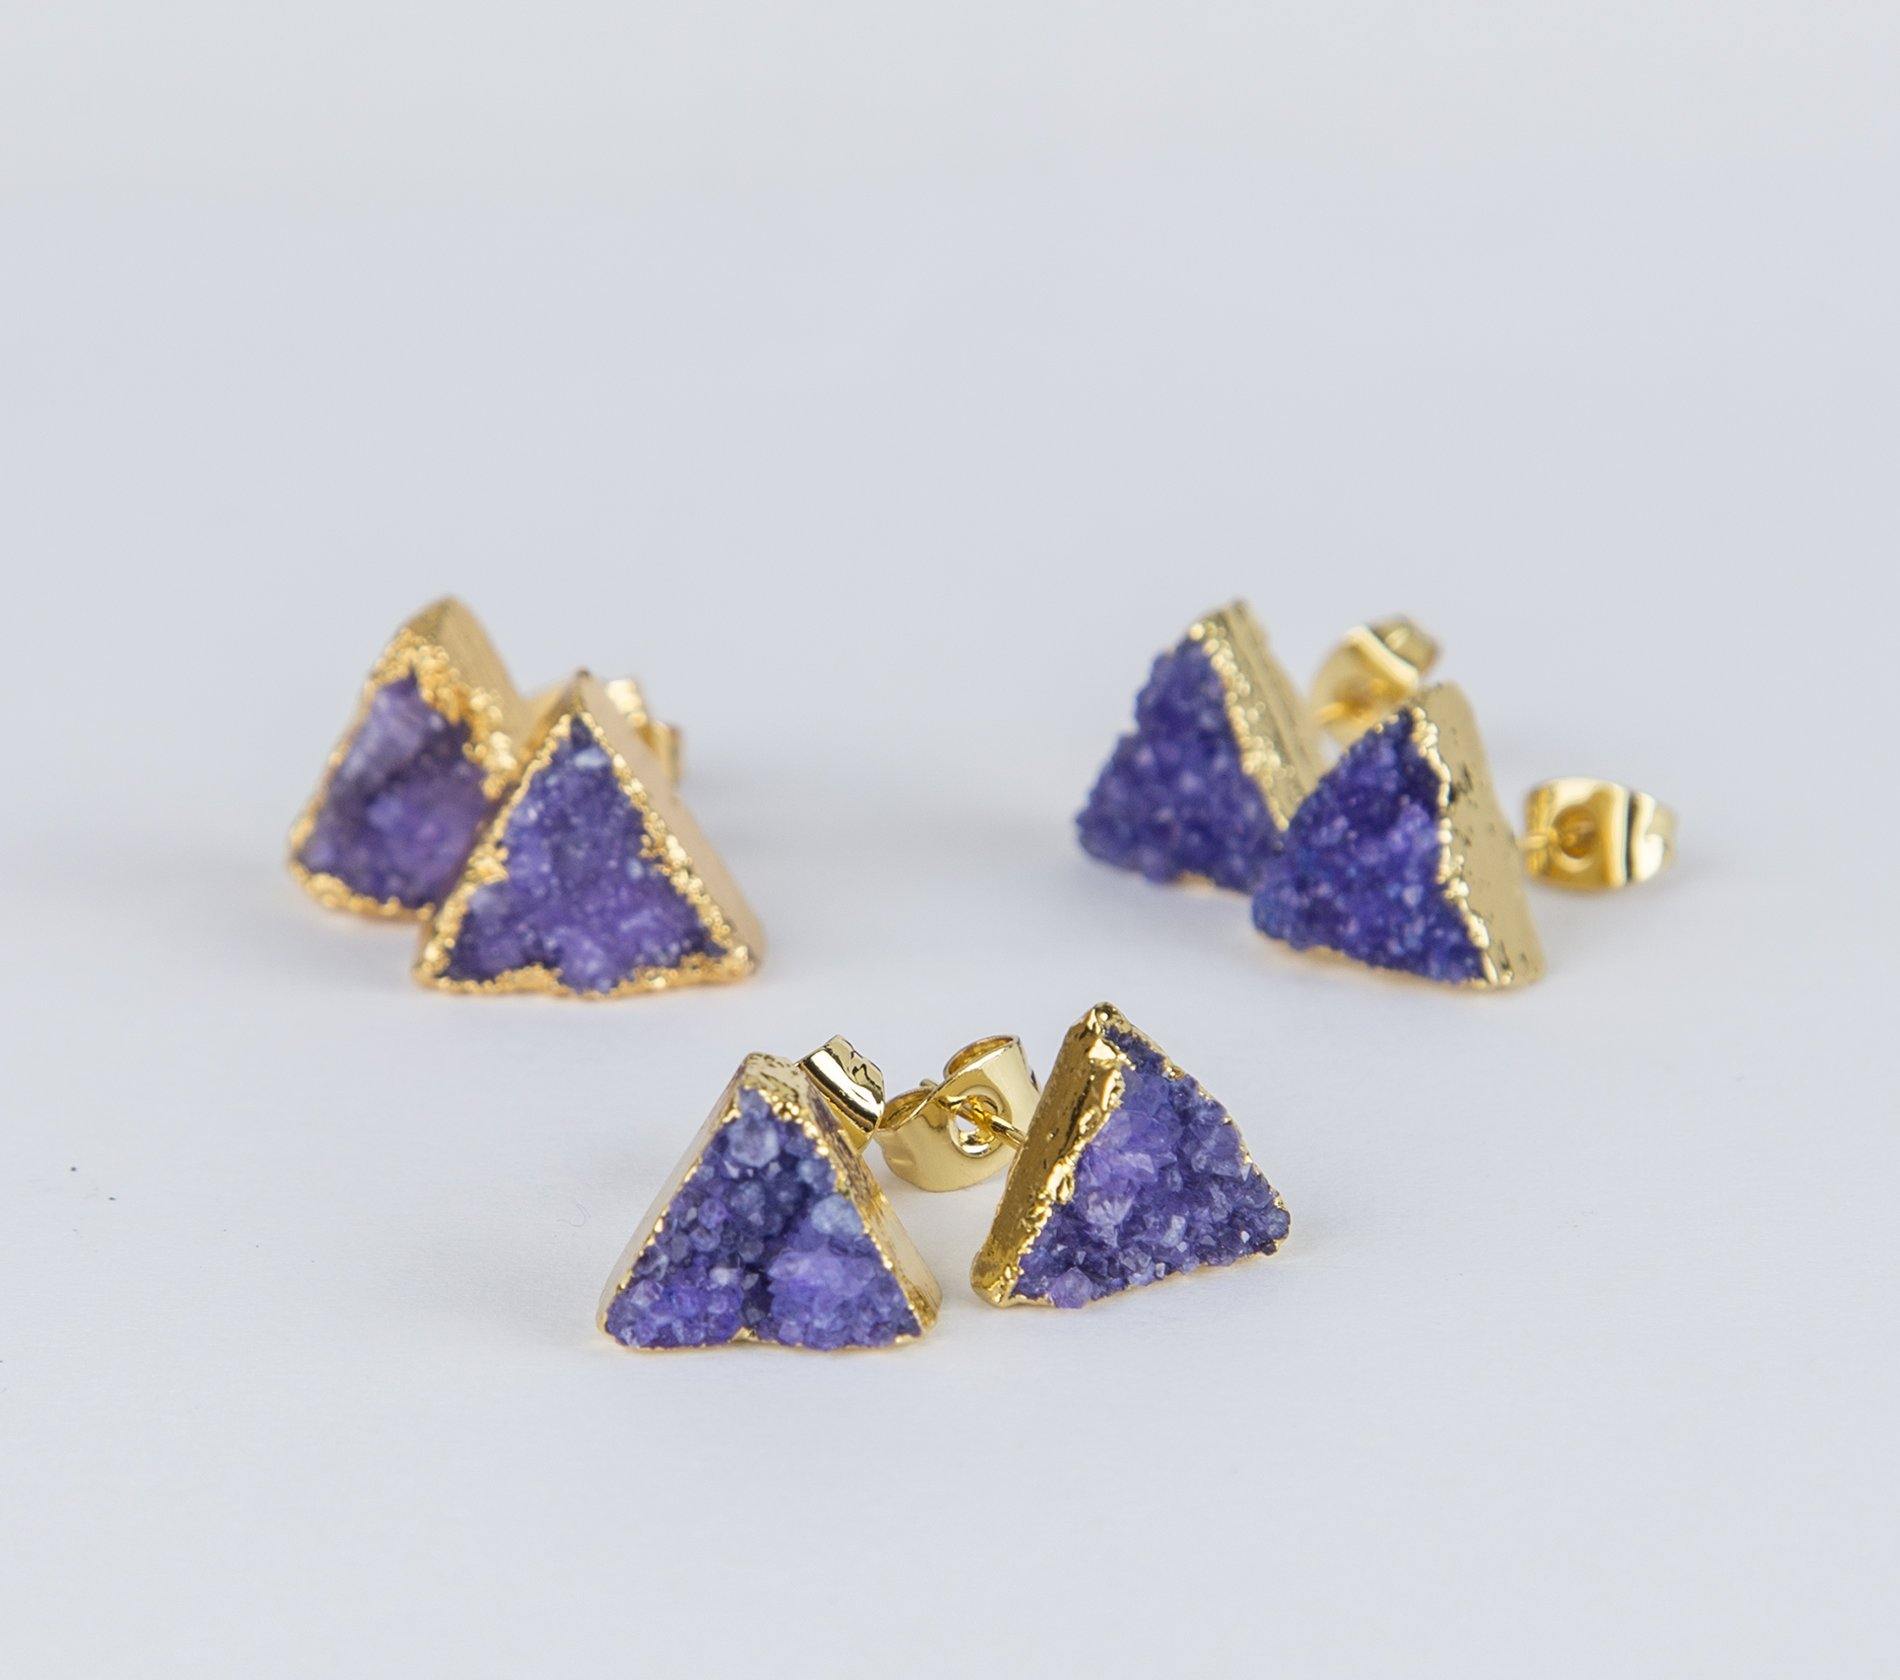 Purple triangle druzy earrings - Premium Jewelry & Accessories - Earrings - Shop now at San Rocco Italia